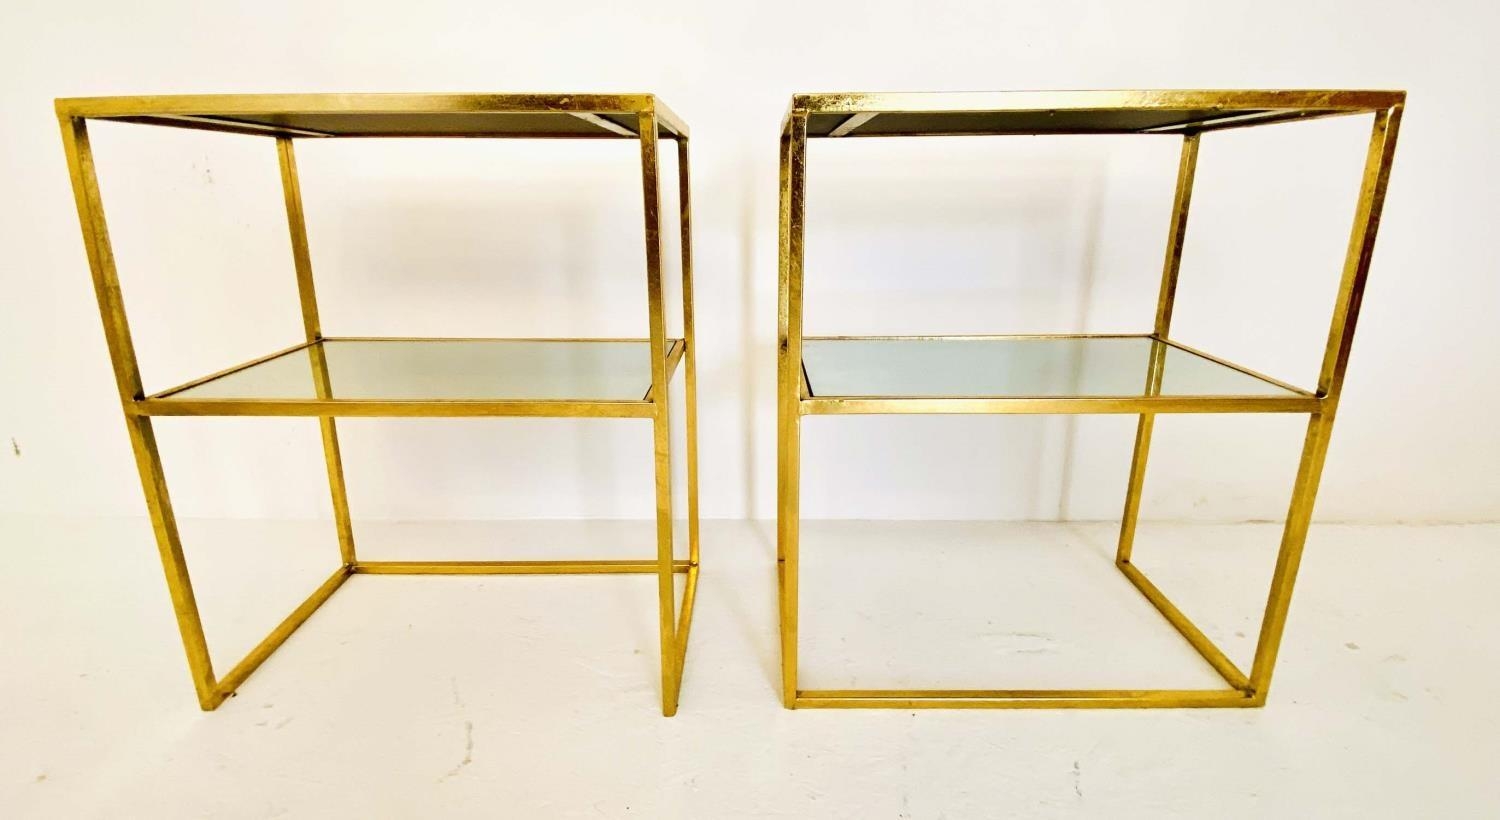 SIDE TABLES, a pair, 51cm x 28cm x 61cm, mirrored glass shelves, gilt metal frames. (2) - Image 2 of 4